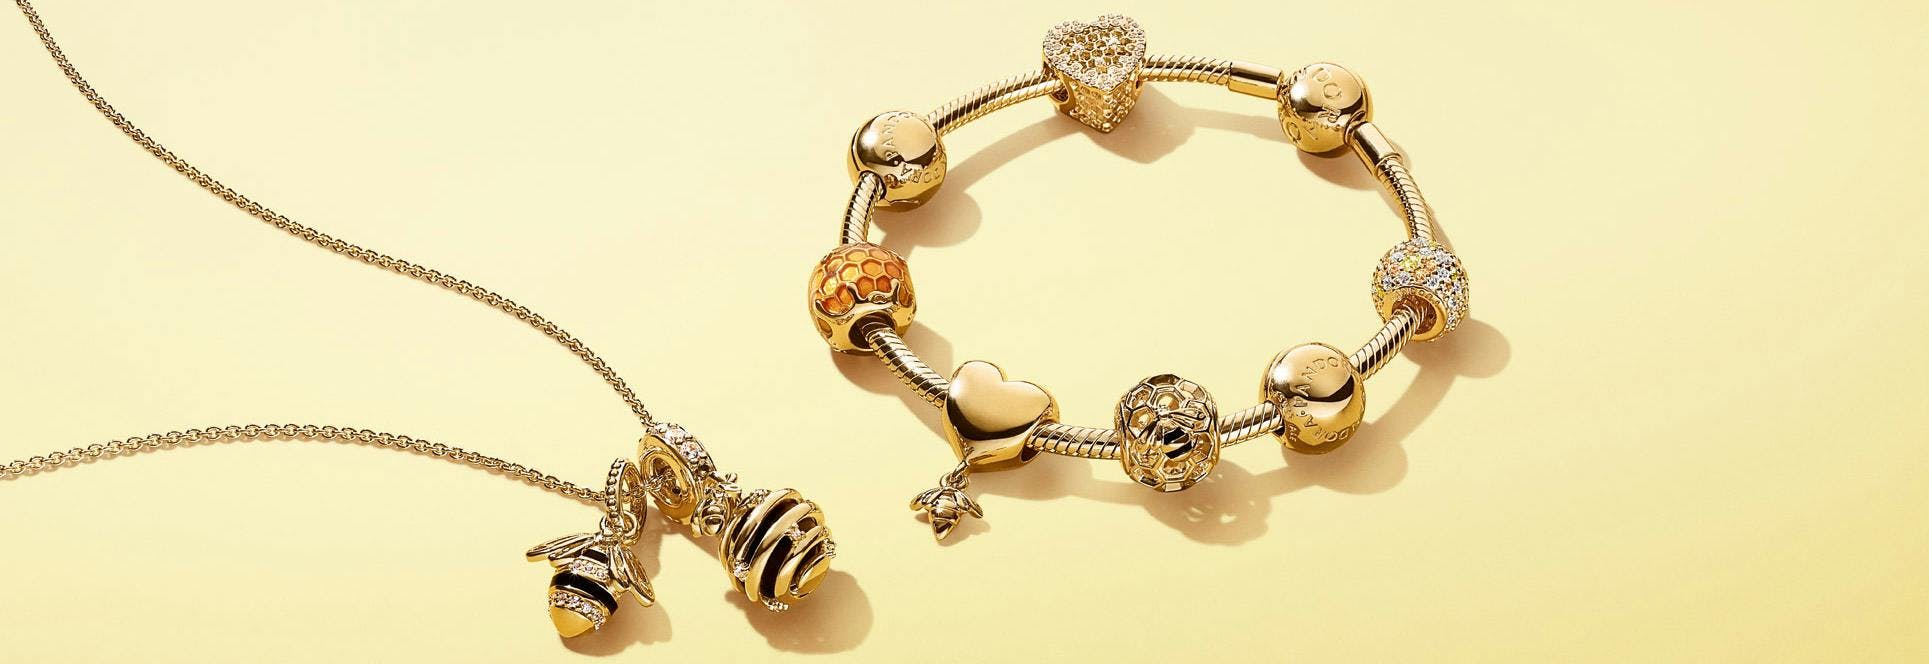 accessories accessory jewelry bracelet gold